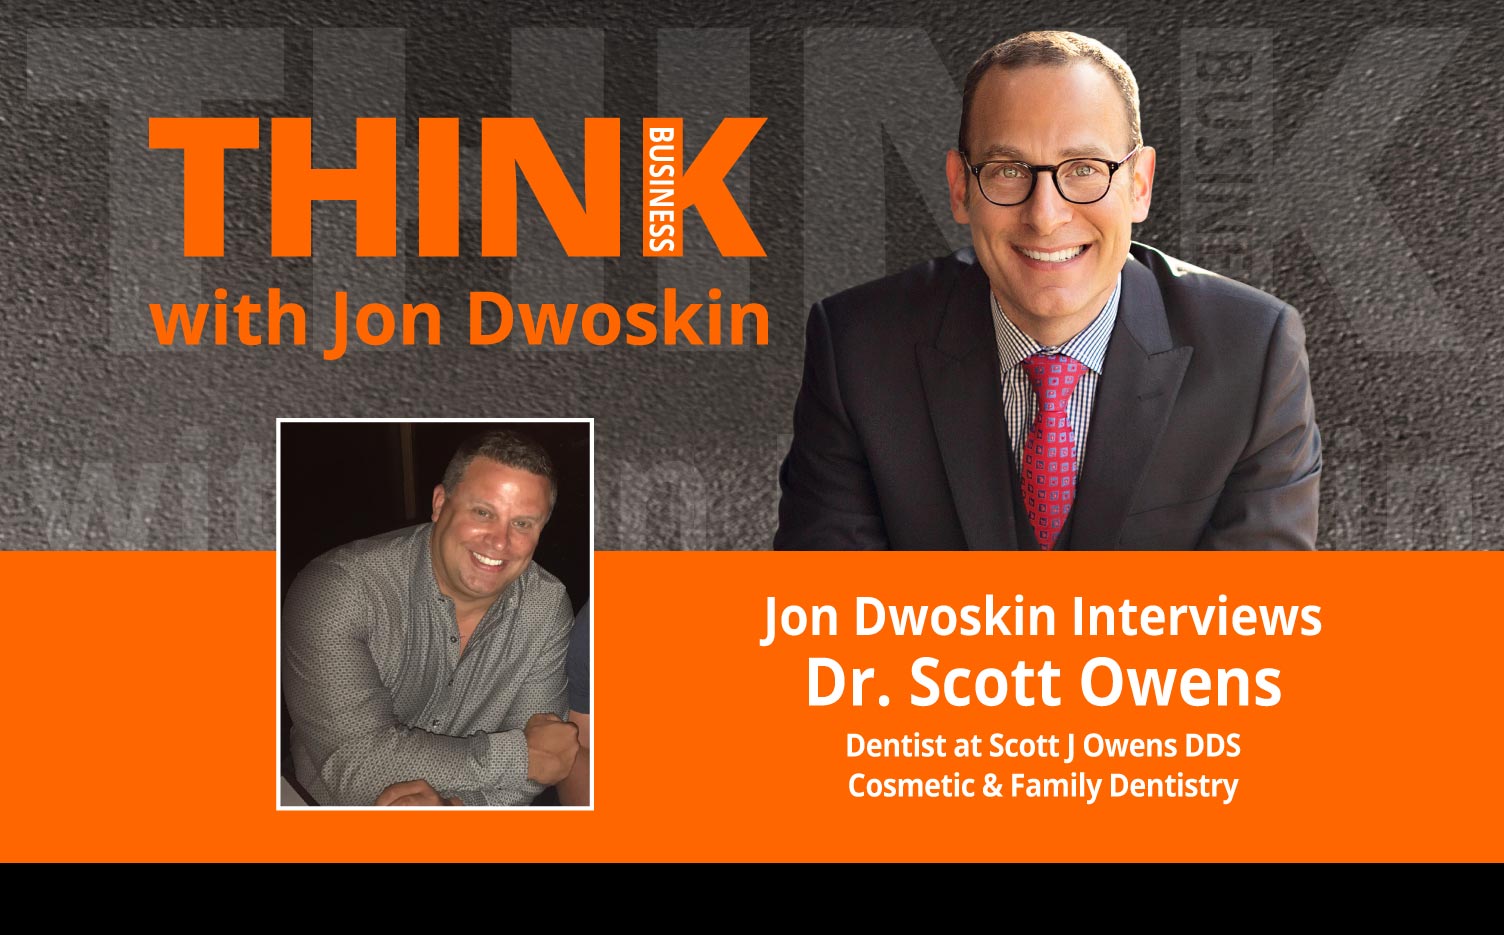 Jon Dwoskin Interviews Dr. Scott Owens, Dentist, Scott J Owens DDS Cosmetic & Family Dentistry